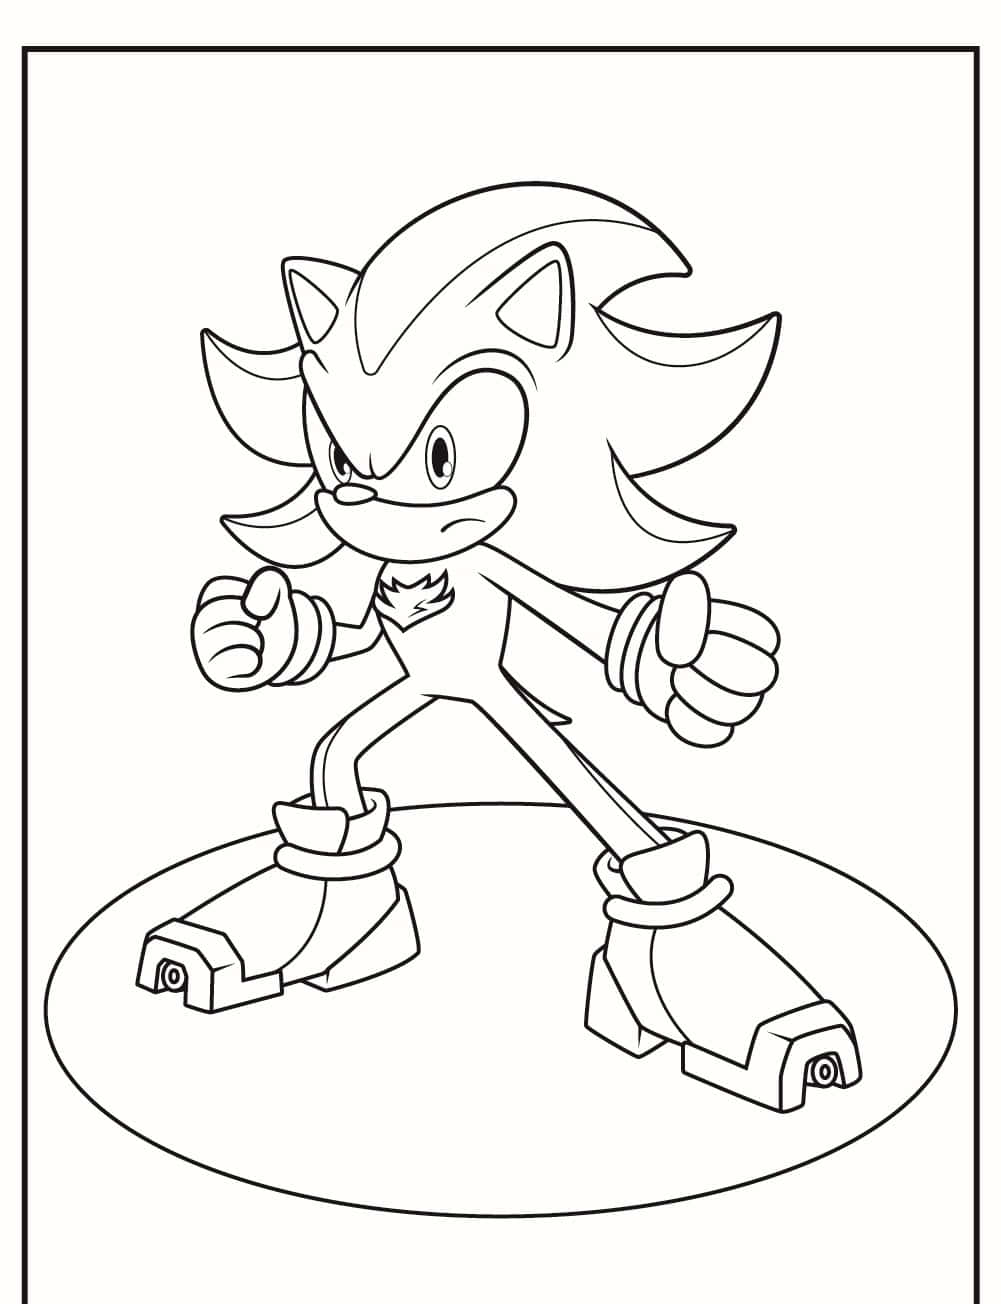 How to Draw Sonic the Hedgehog | Nil Tech - shop.nil-tech